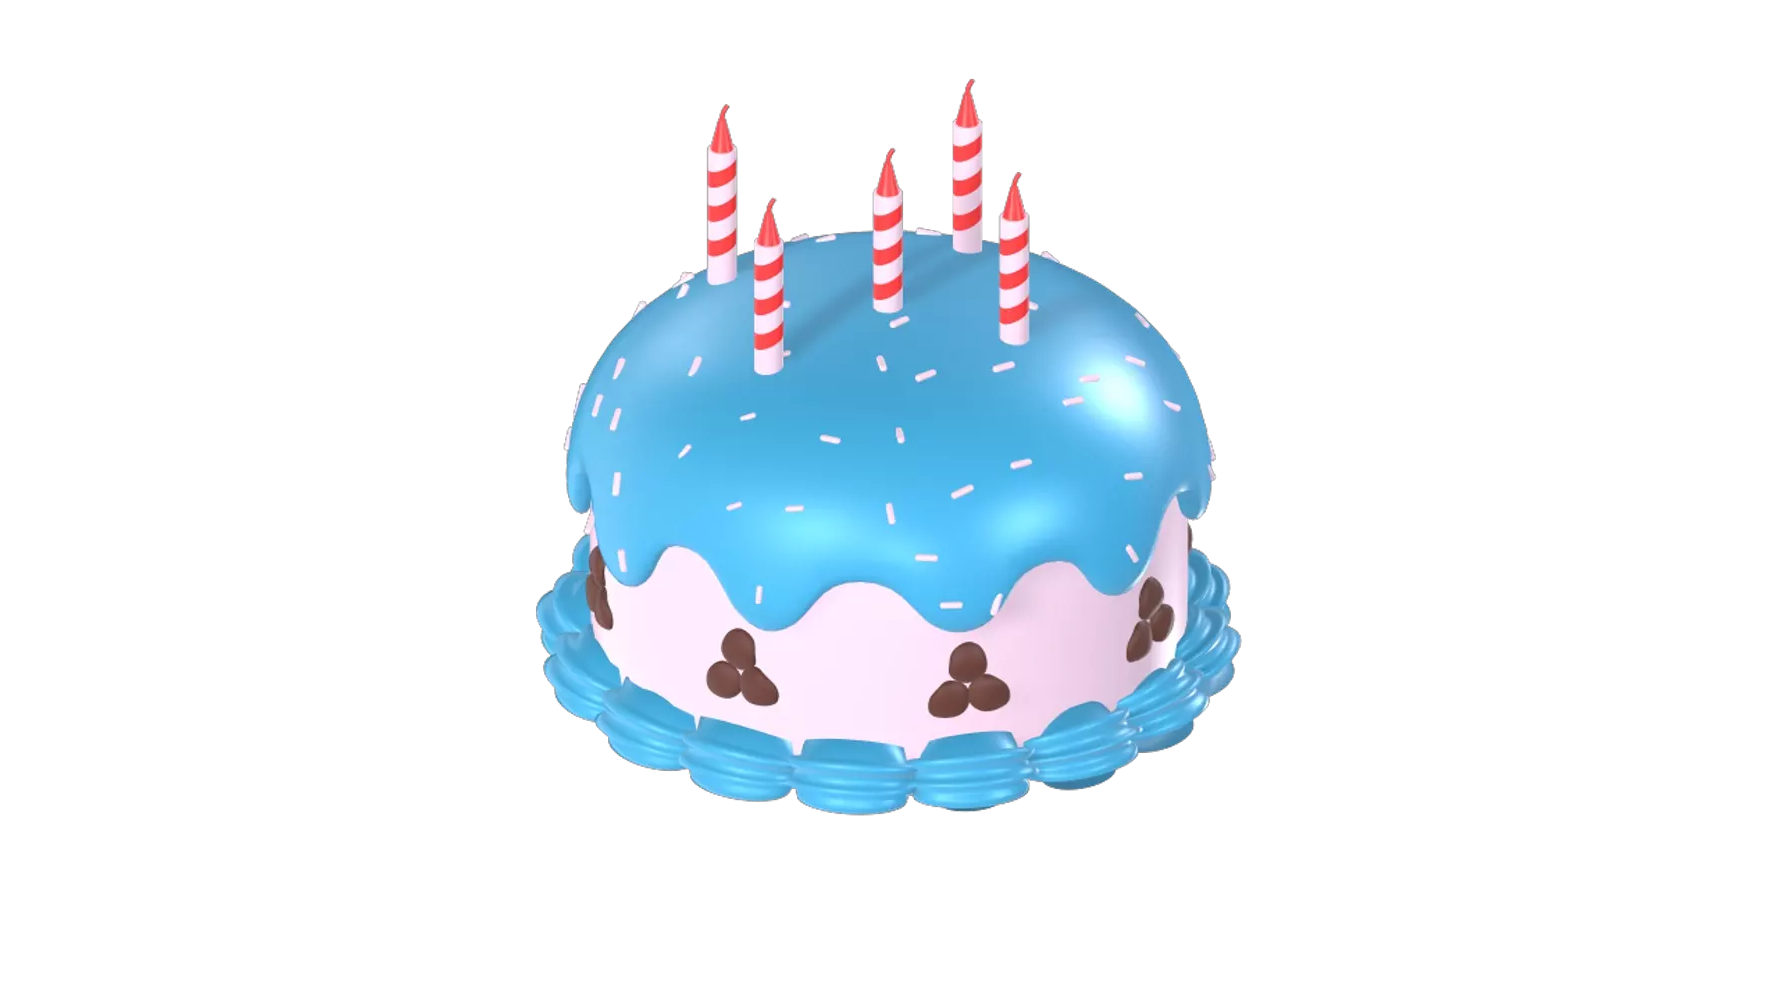 Dome Birthday Cake 3D Graphic